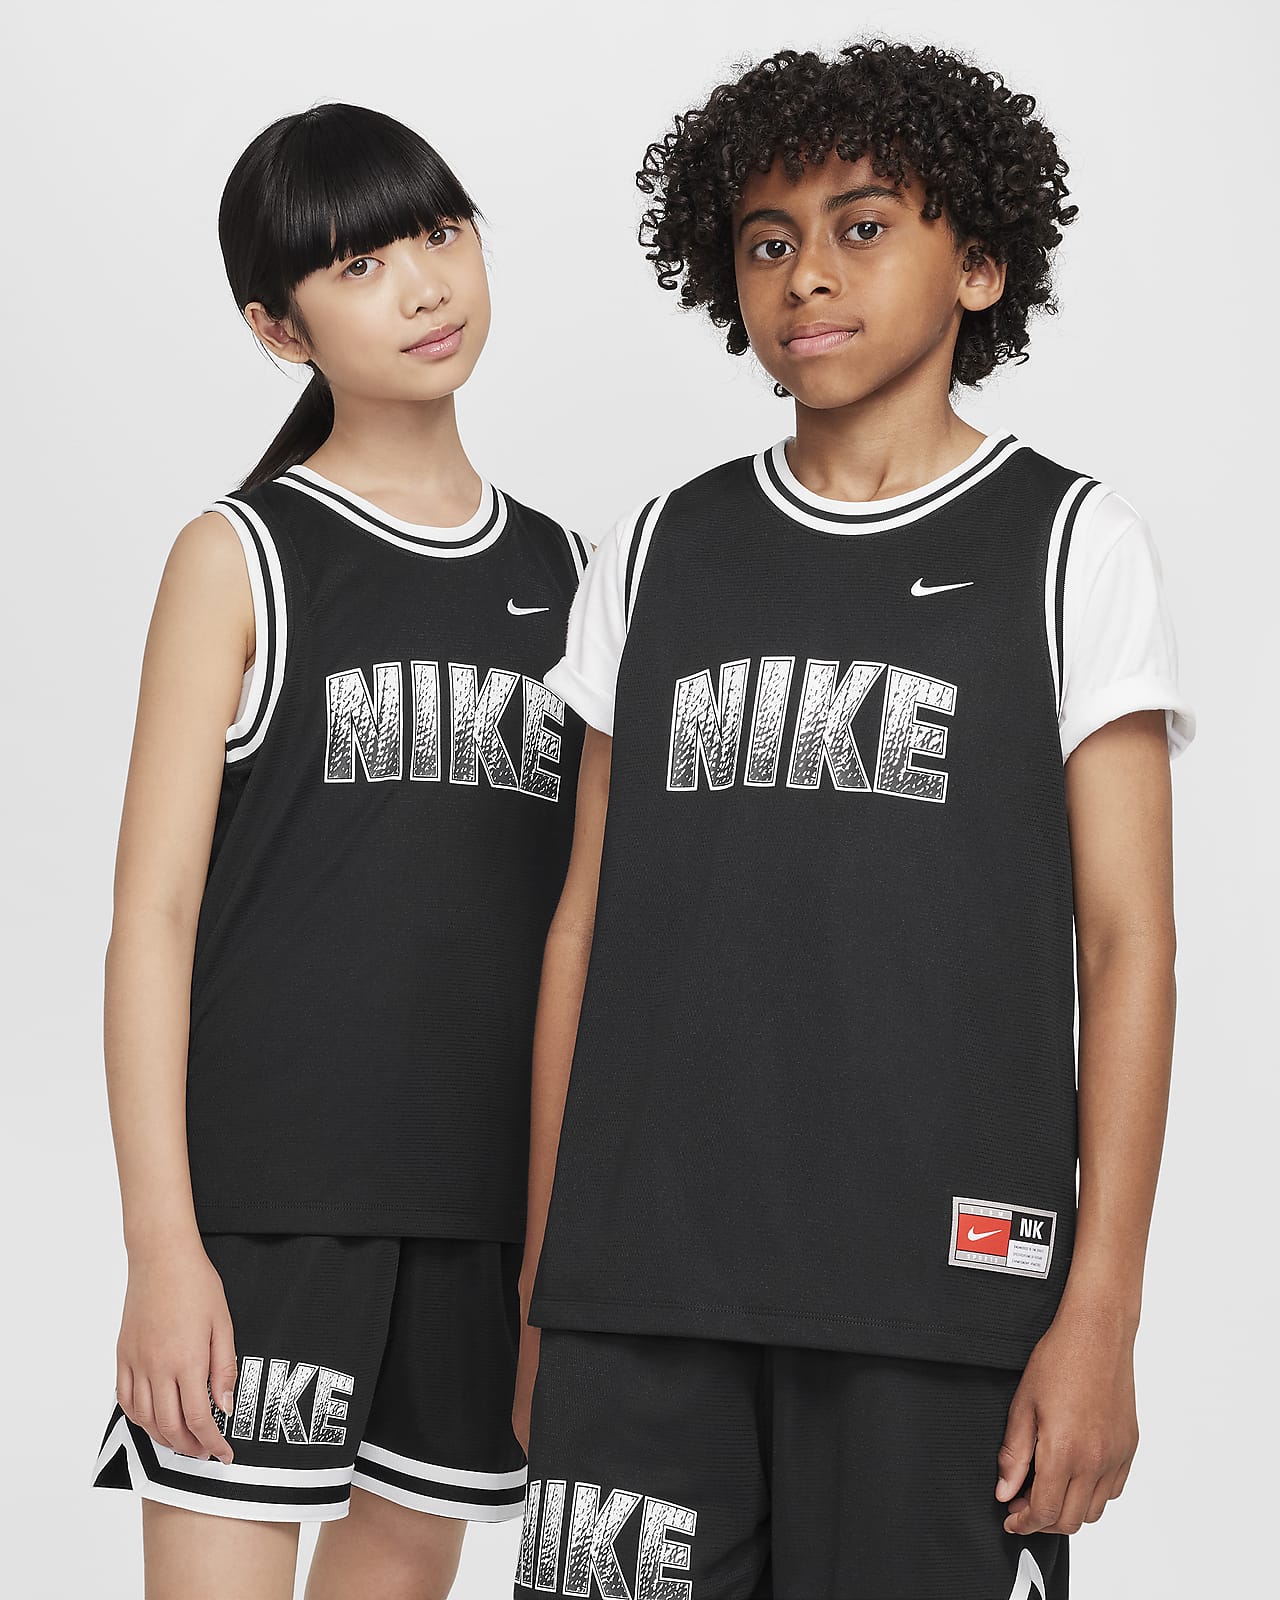 Nike Culture of Basketball Older Kids' Dri-FIT Basketball Jersey